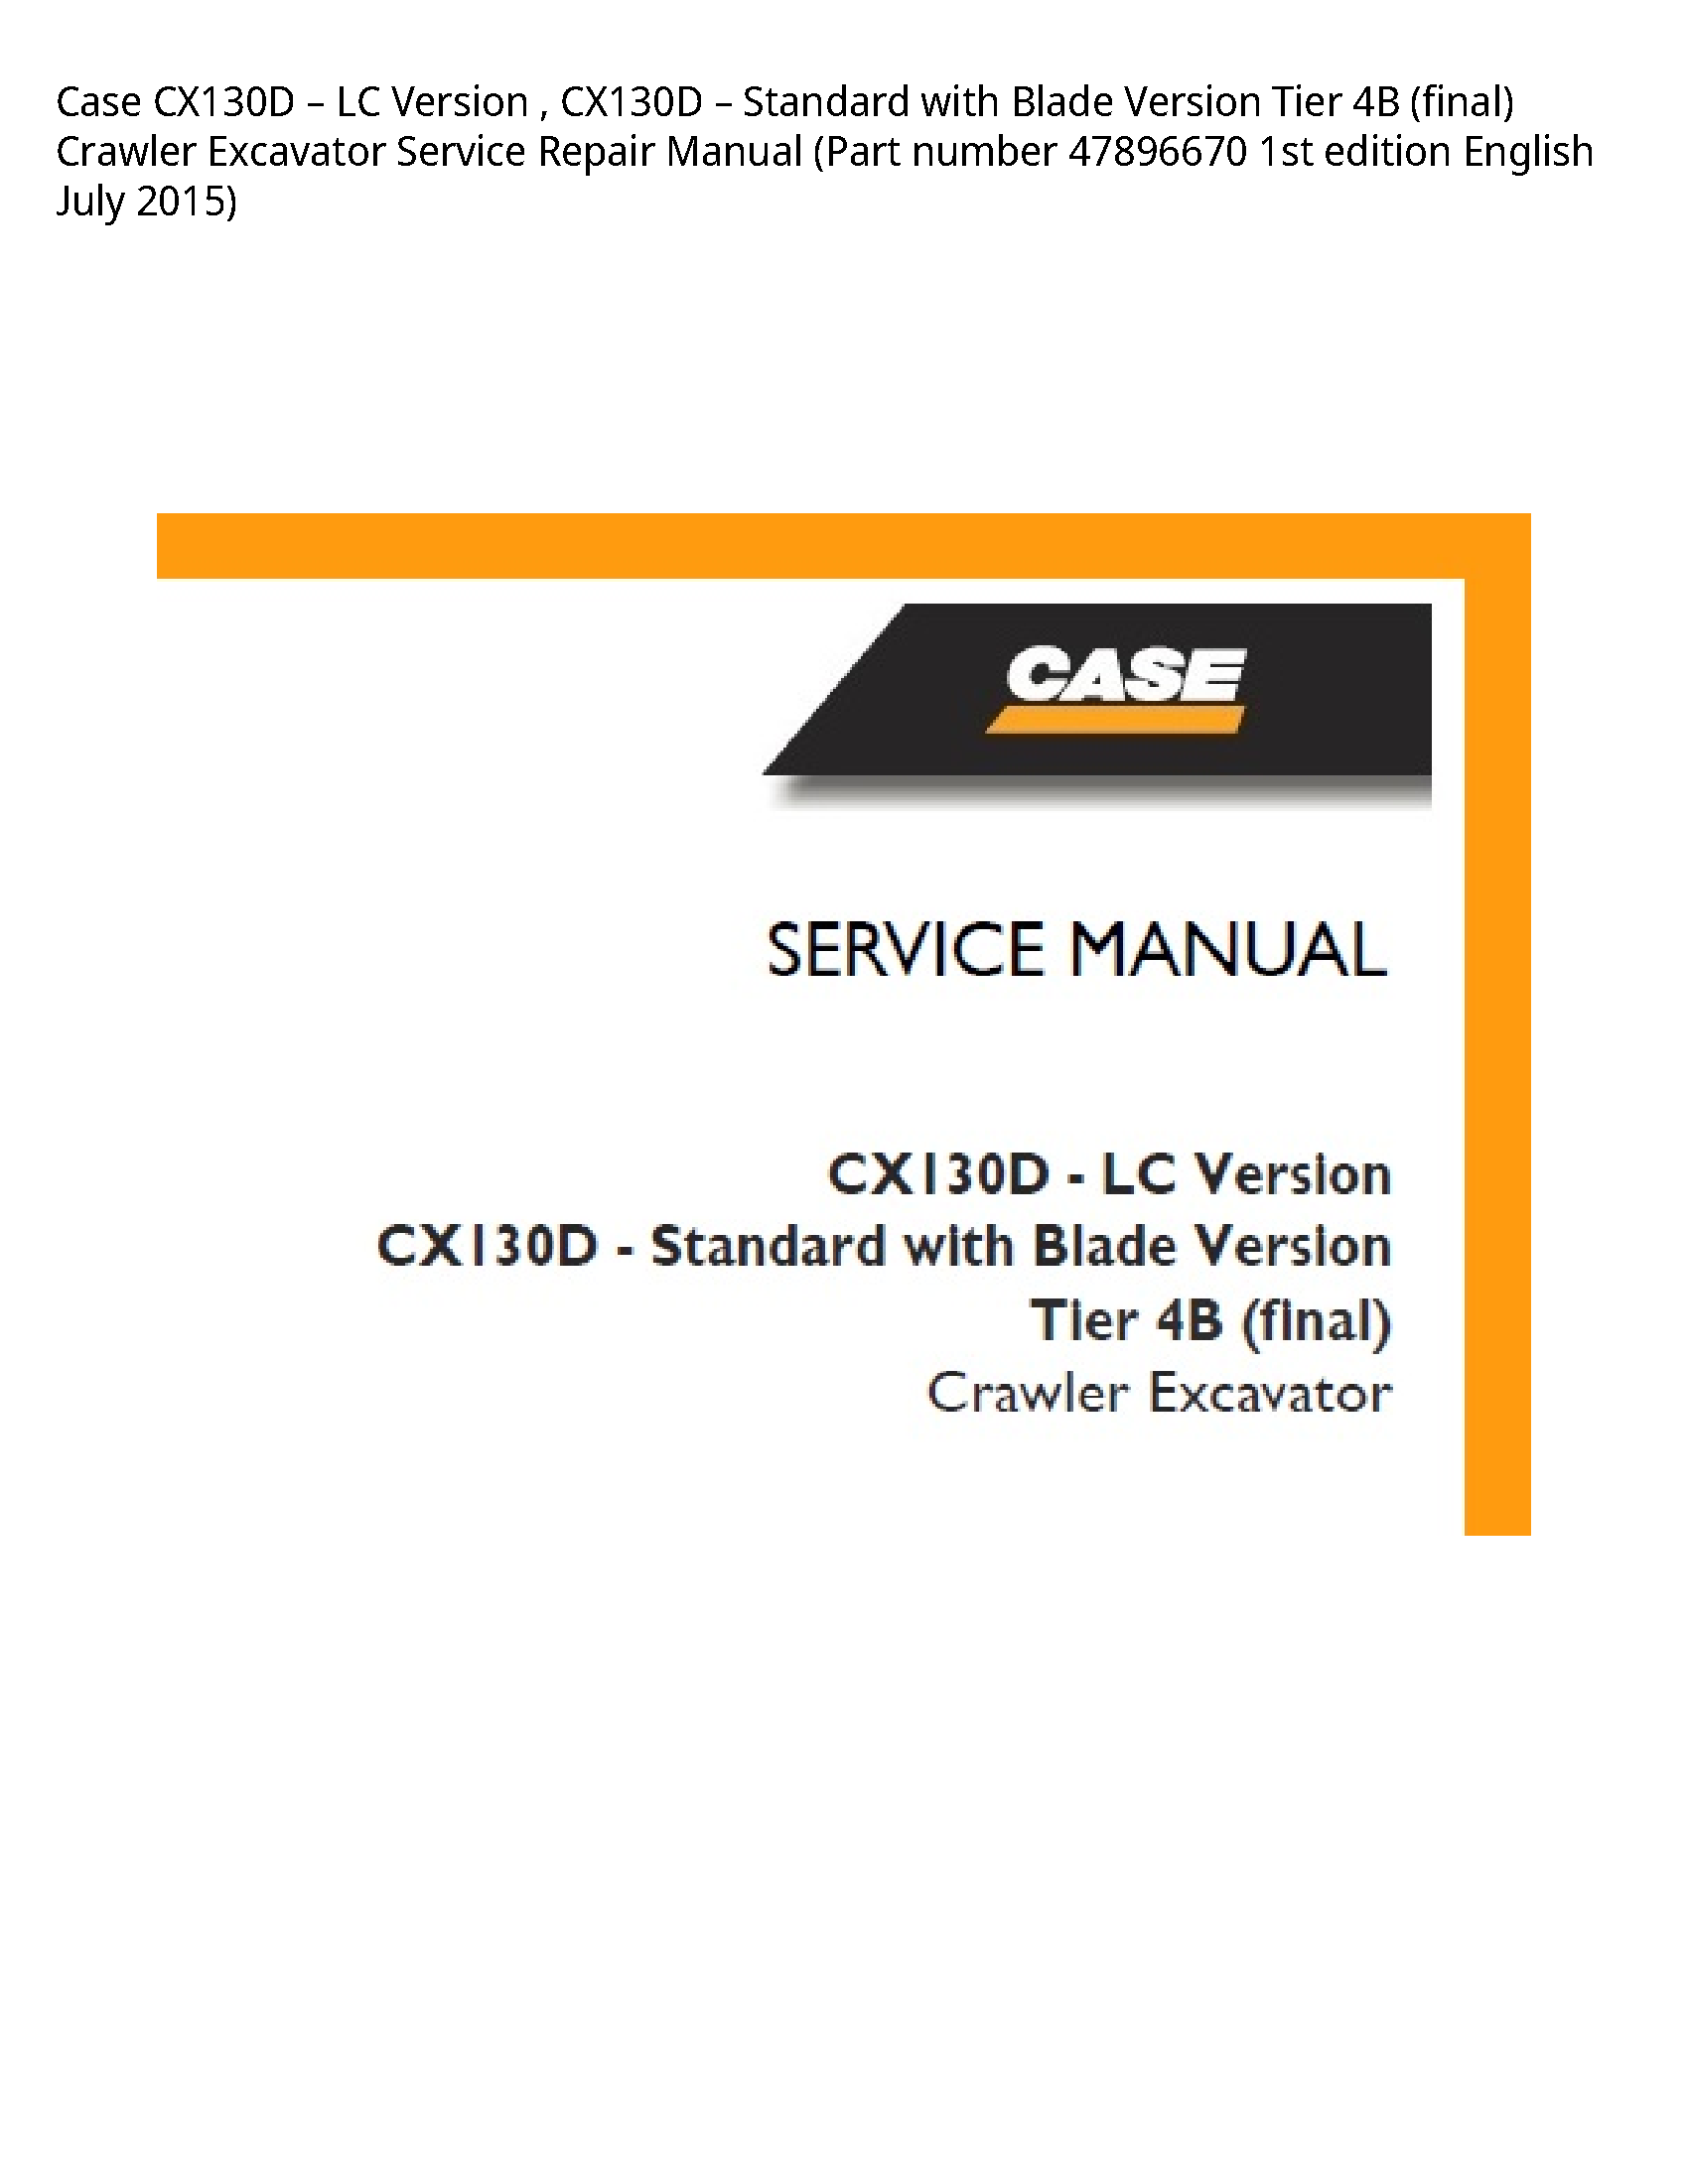 Case/Case IH CX130D LC Version Standard with Blade Version Tier (final) Crawler Excavator manual